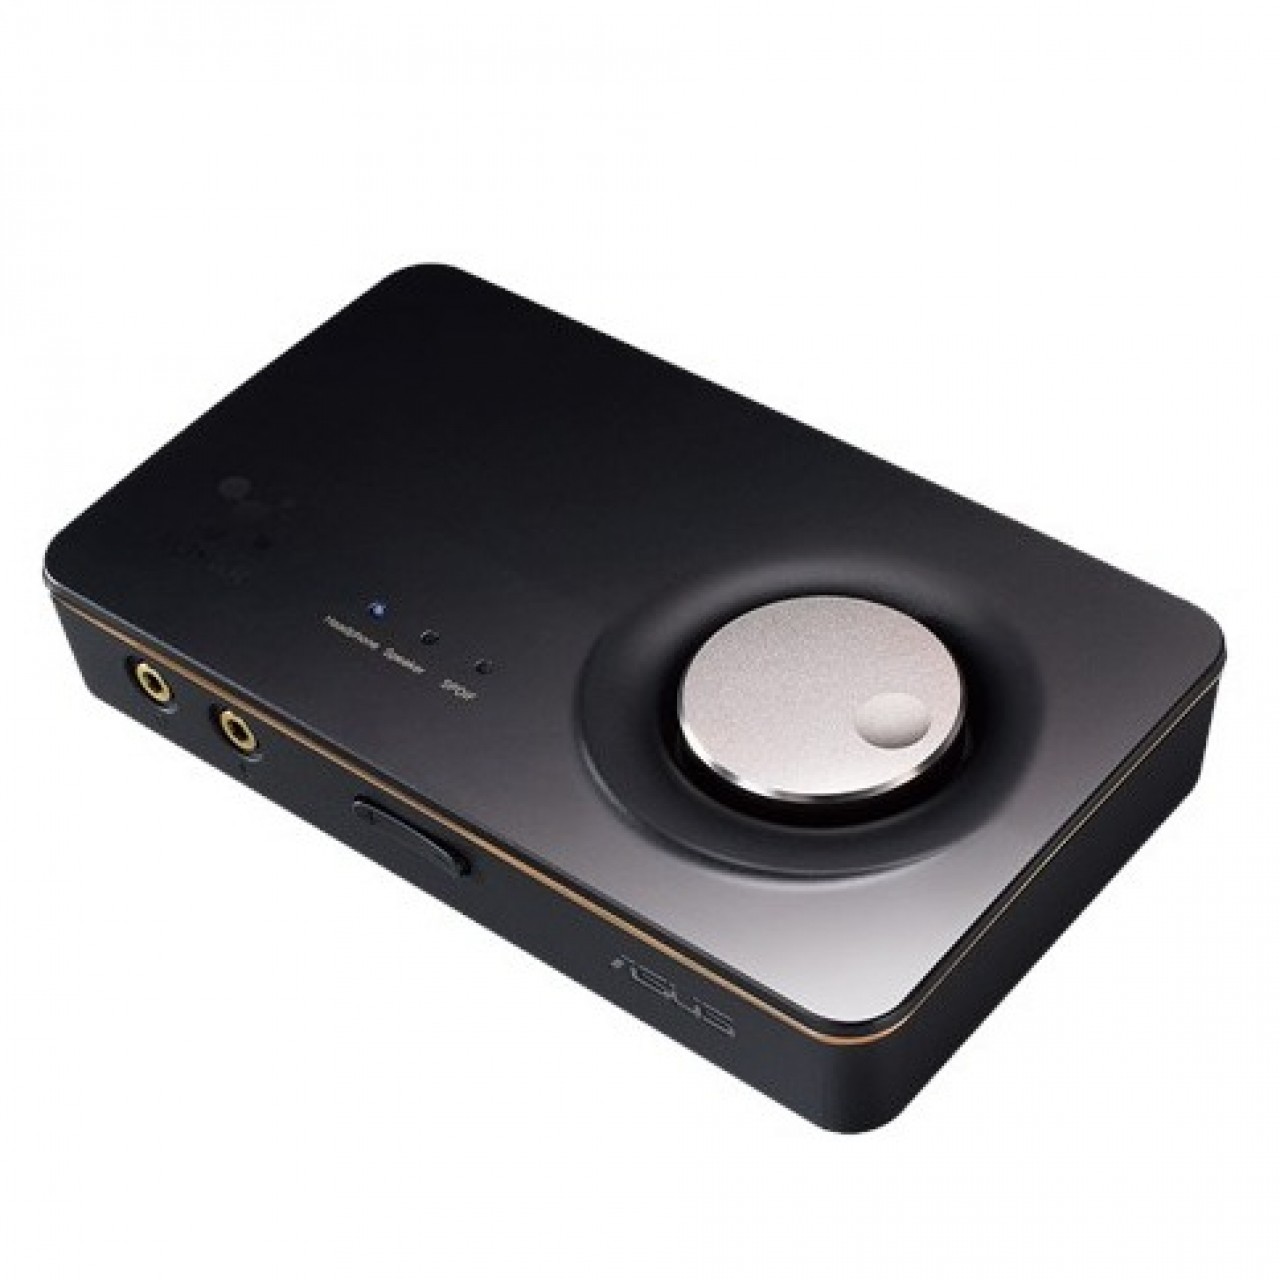 26. ASUS Sound Card XONAR U7 MKII 7.1 USB – Sonic Studio Software – Dedicated Headphone & Mic Volume